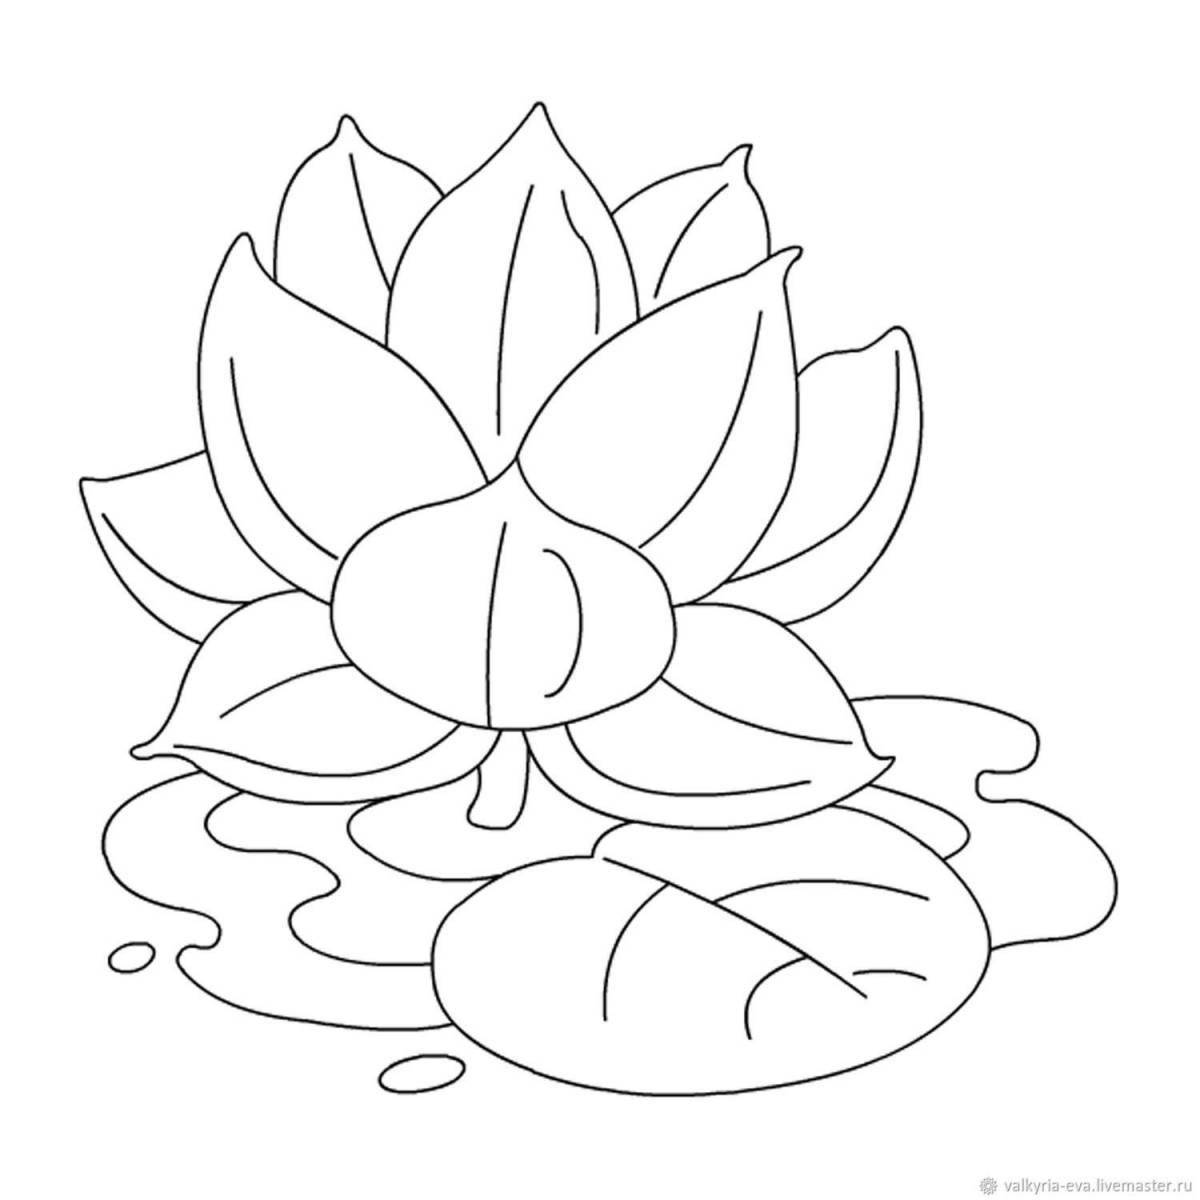 Great lotus coloring book for kids